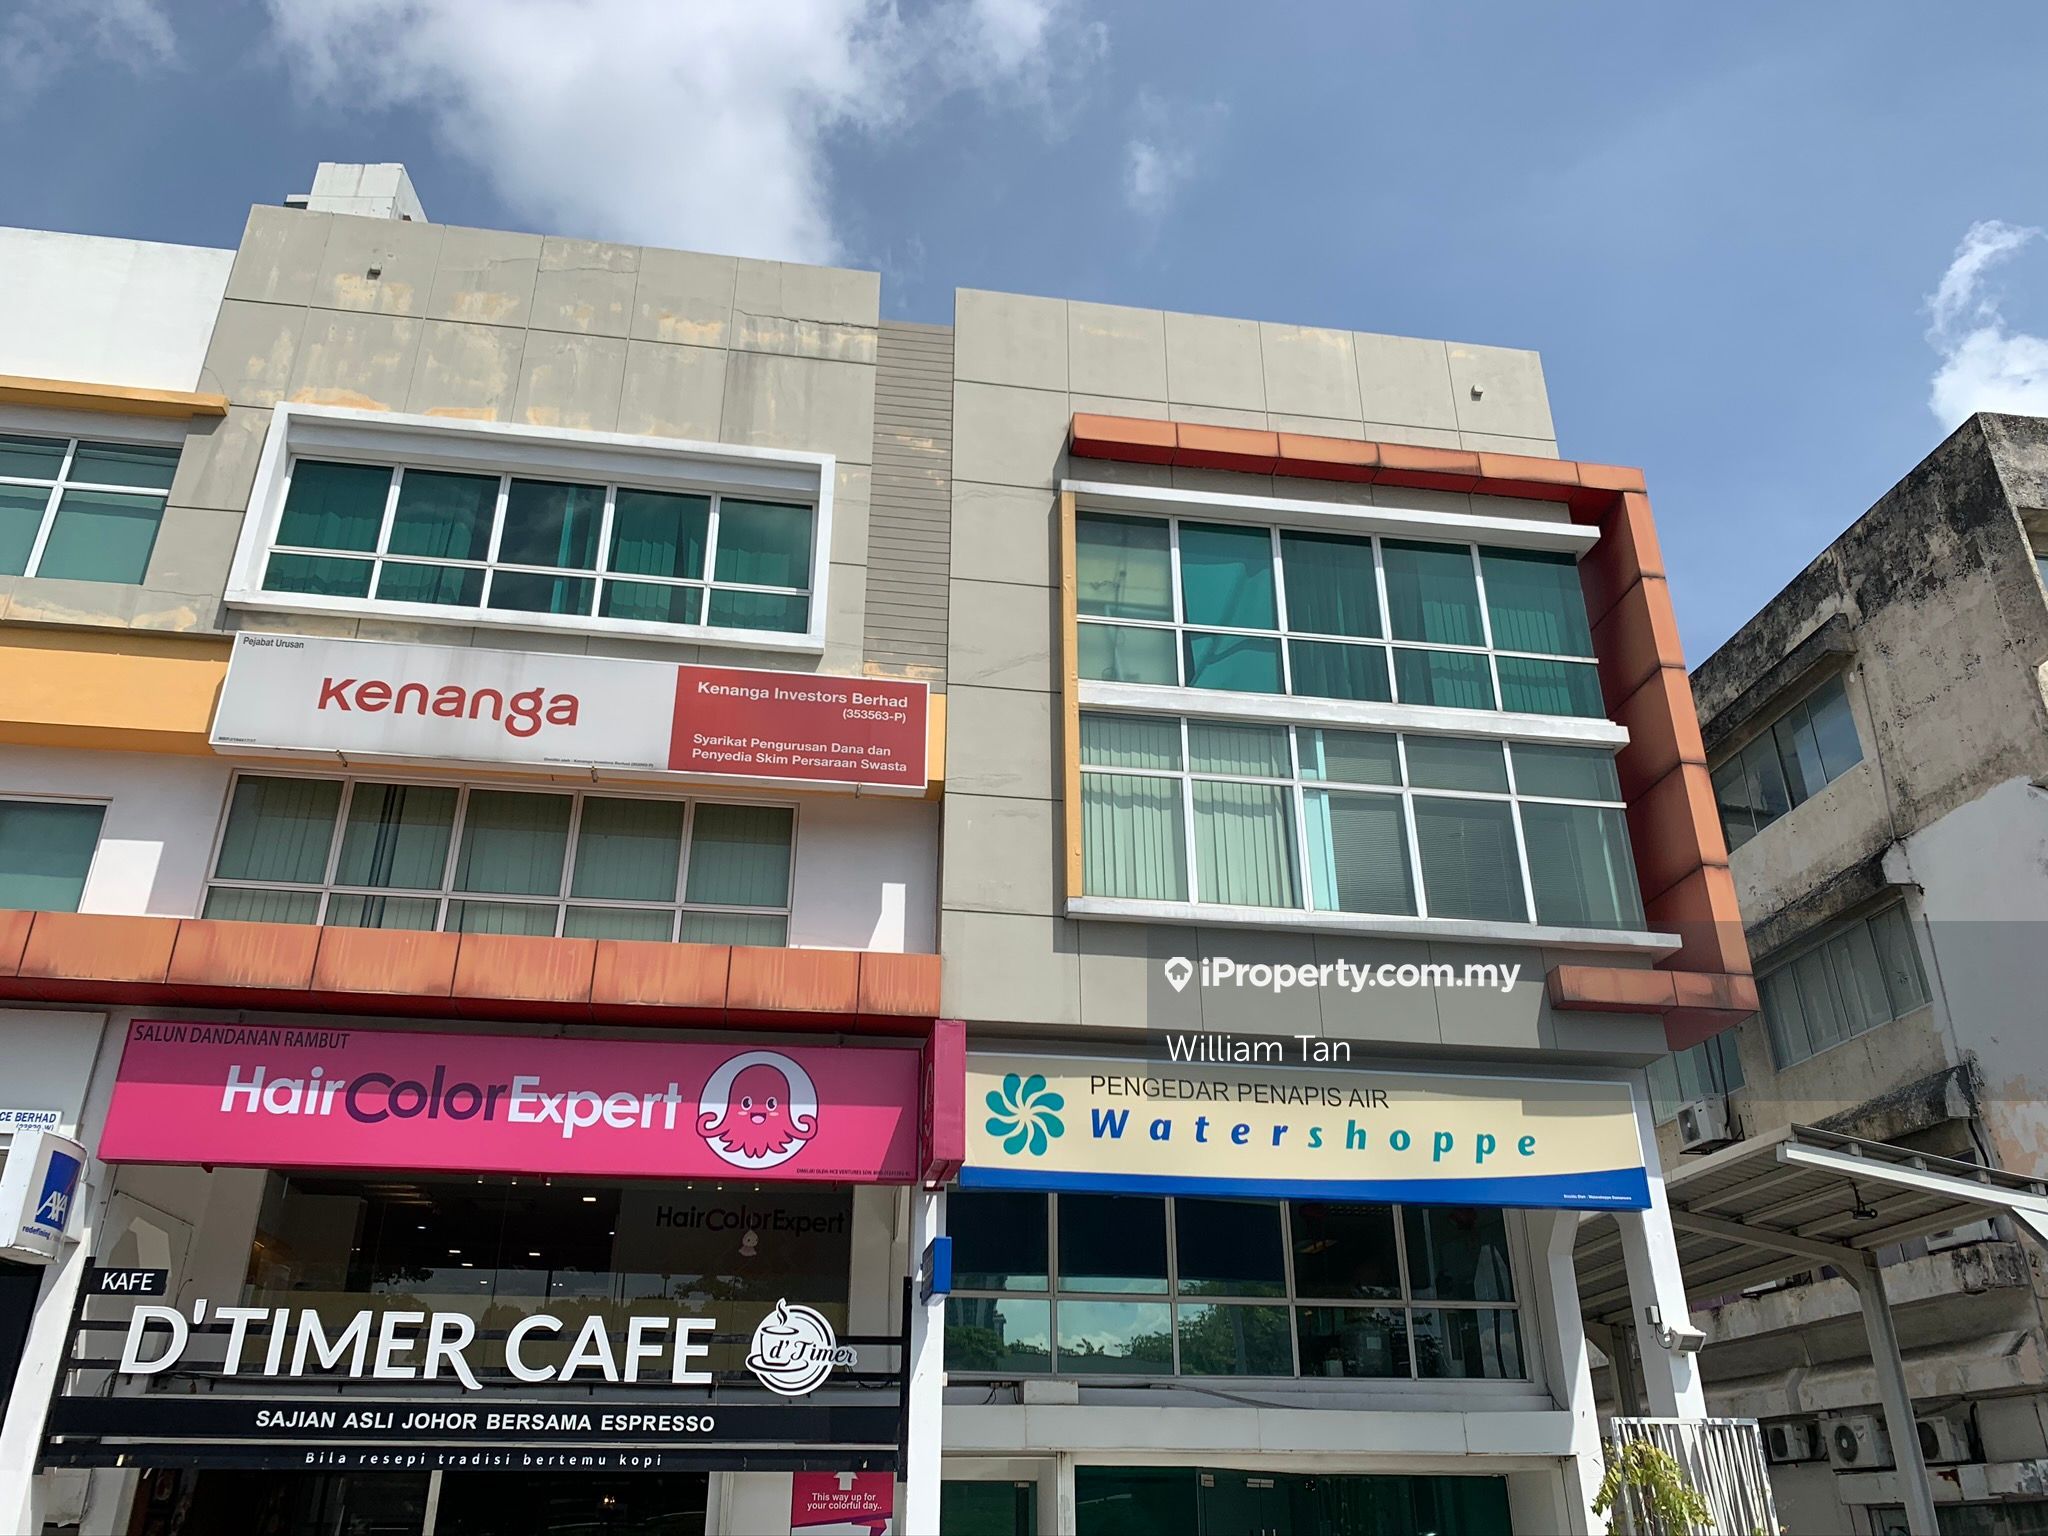 Uptown Pj 4 storeys Shop 11031 sqft for sale at RM 15Million, Damansara Utama